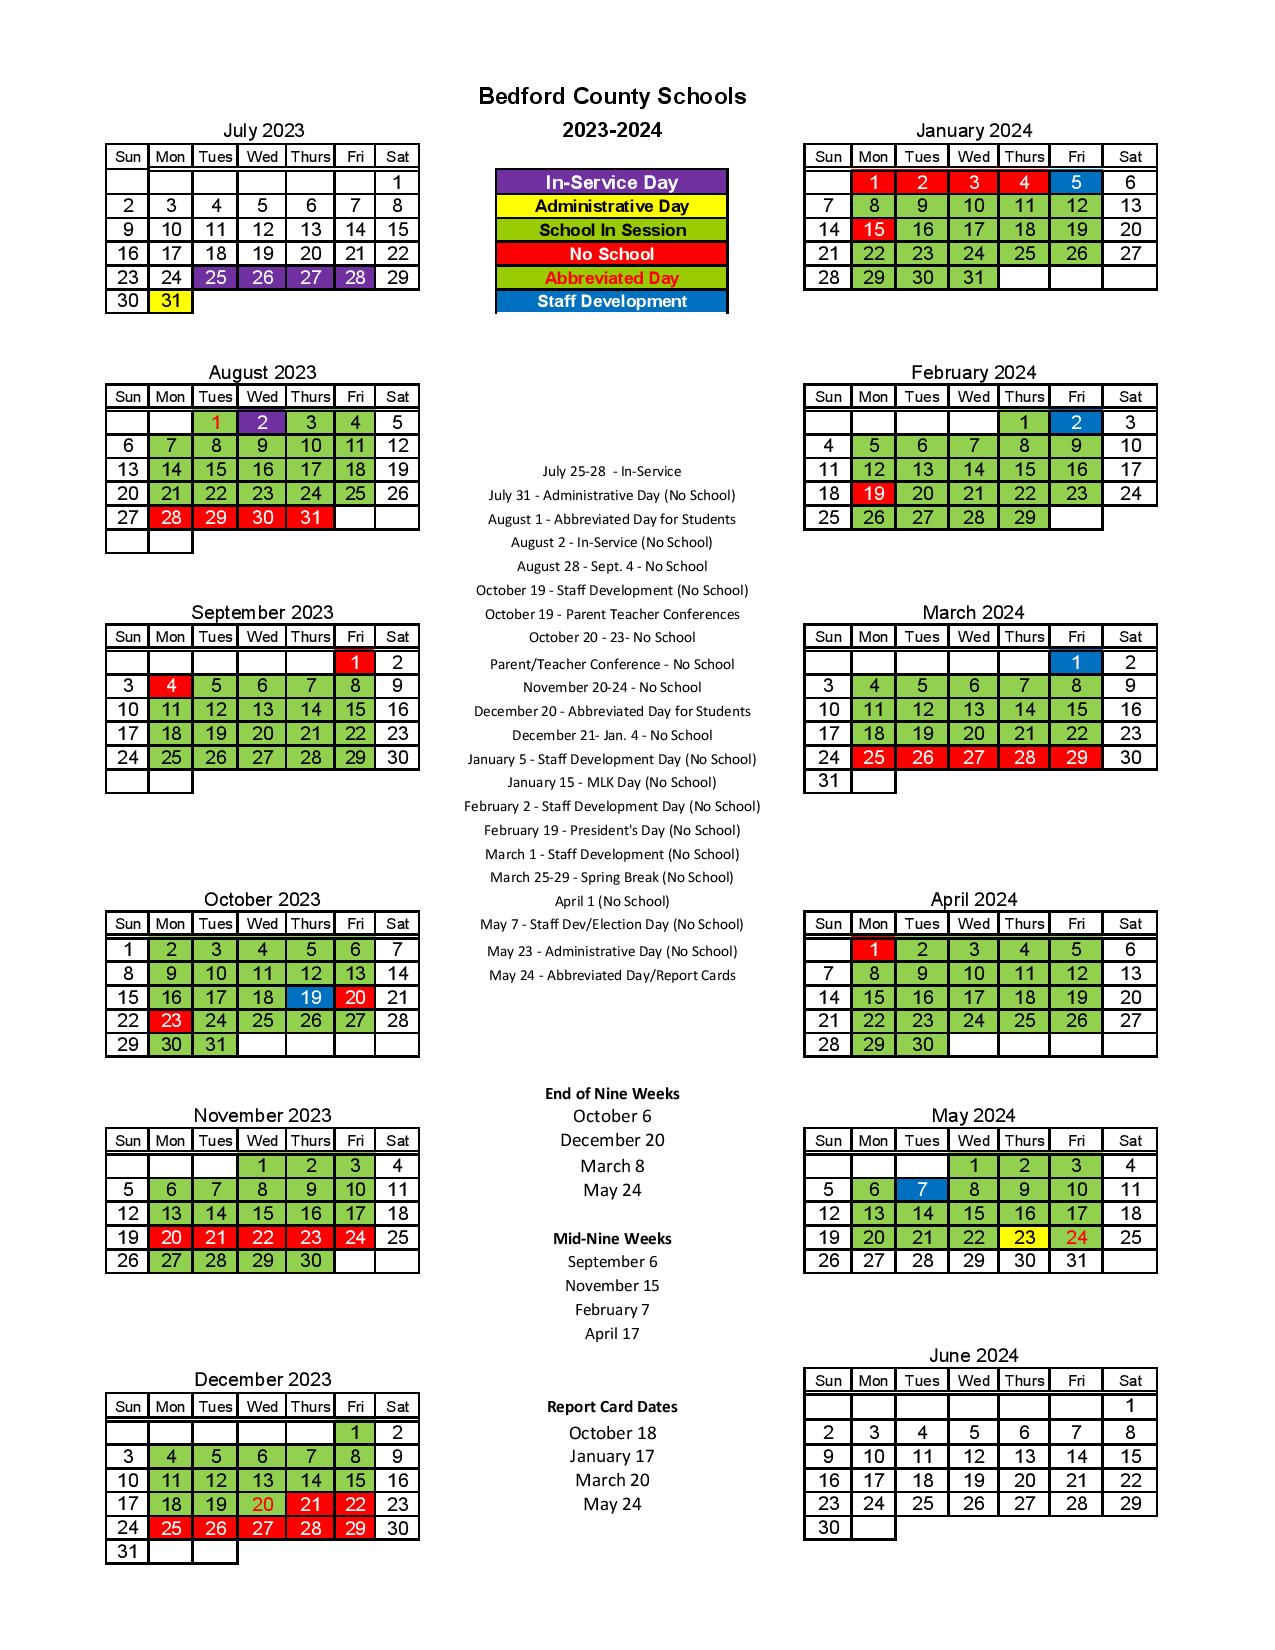 Bedford County Schools Calendar 20232024 in PDF